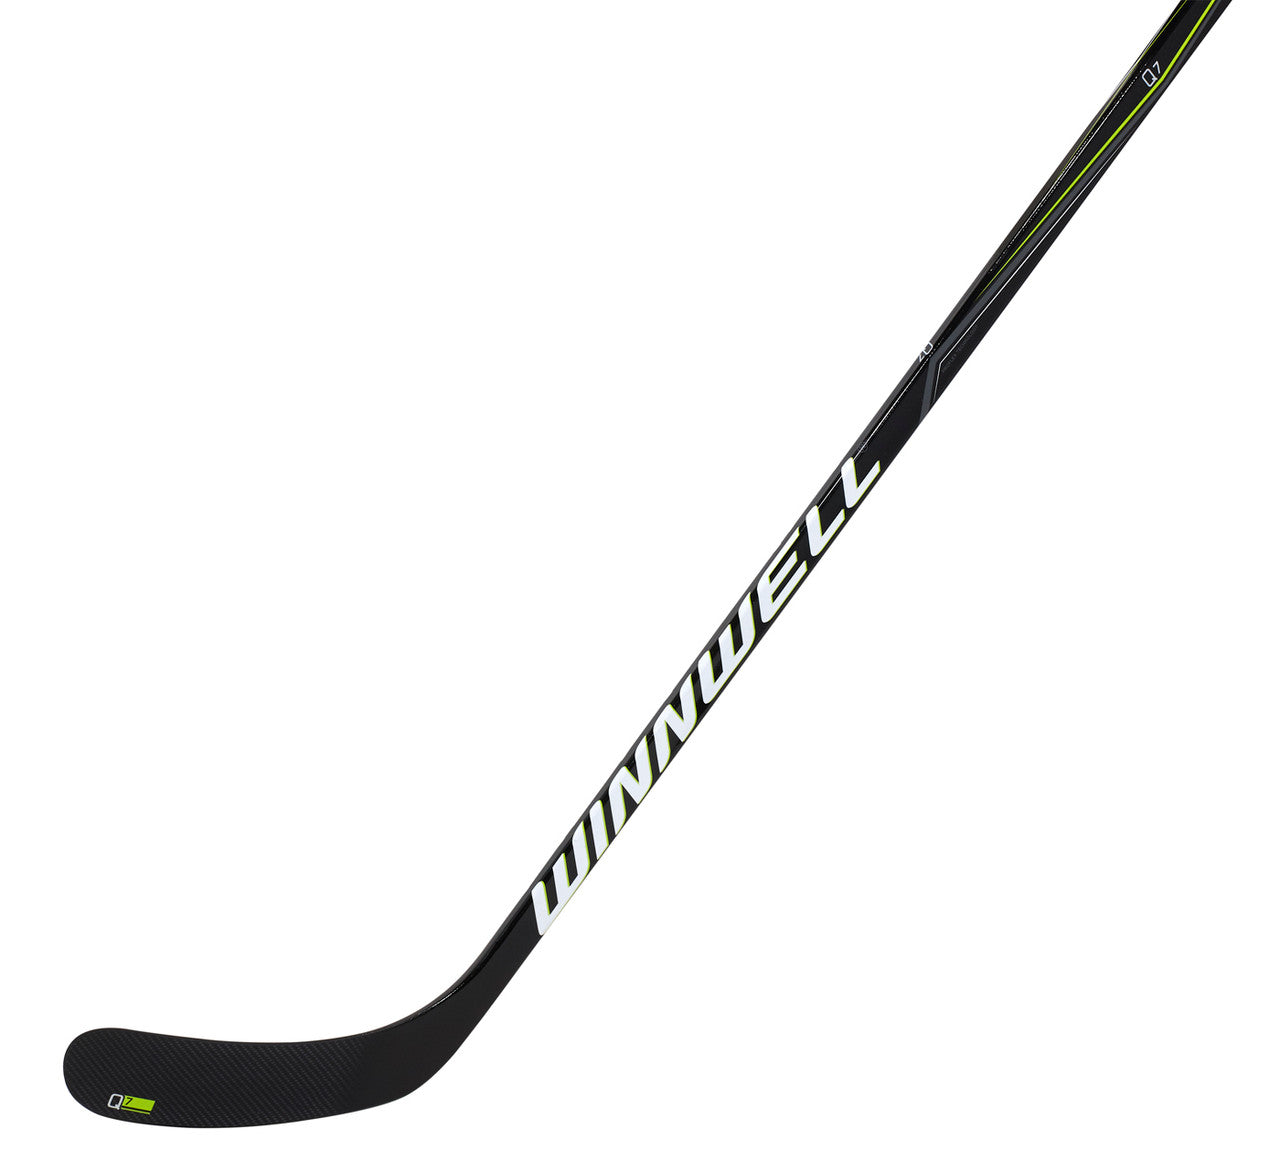 Winnwell Senior Hockey Stick Q7 Flex 85 Blade PS119 W/Grip New